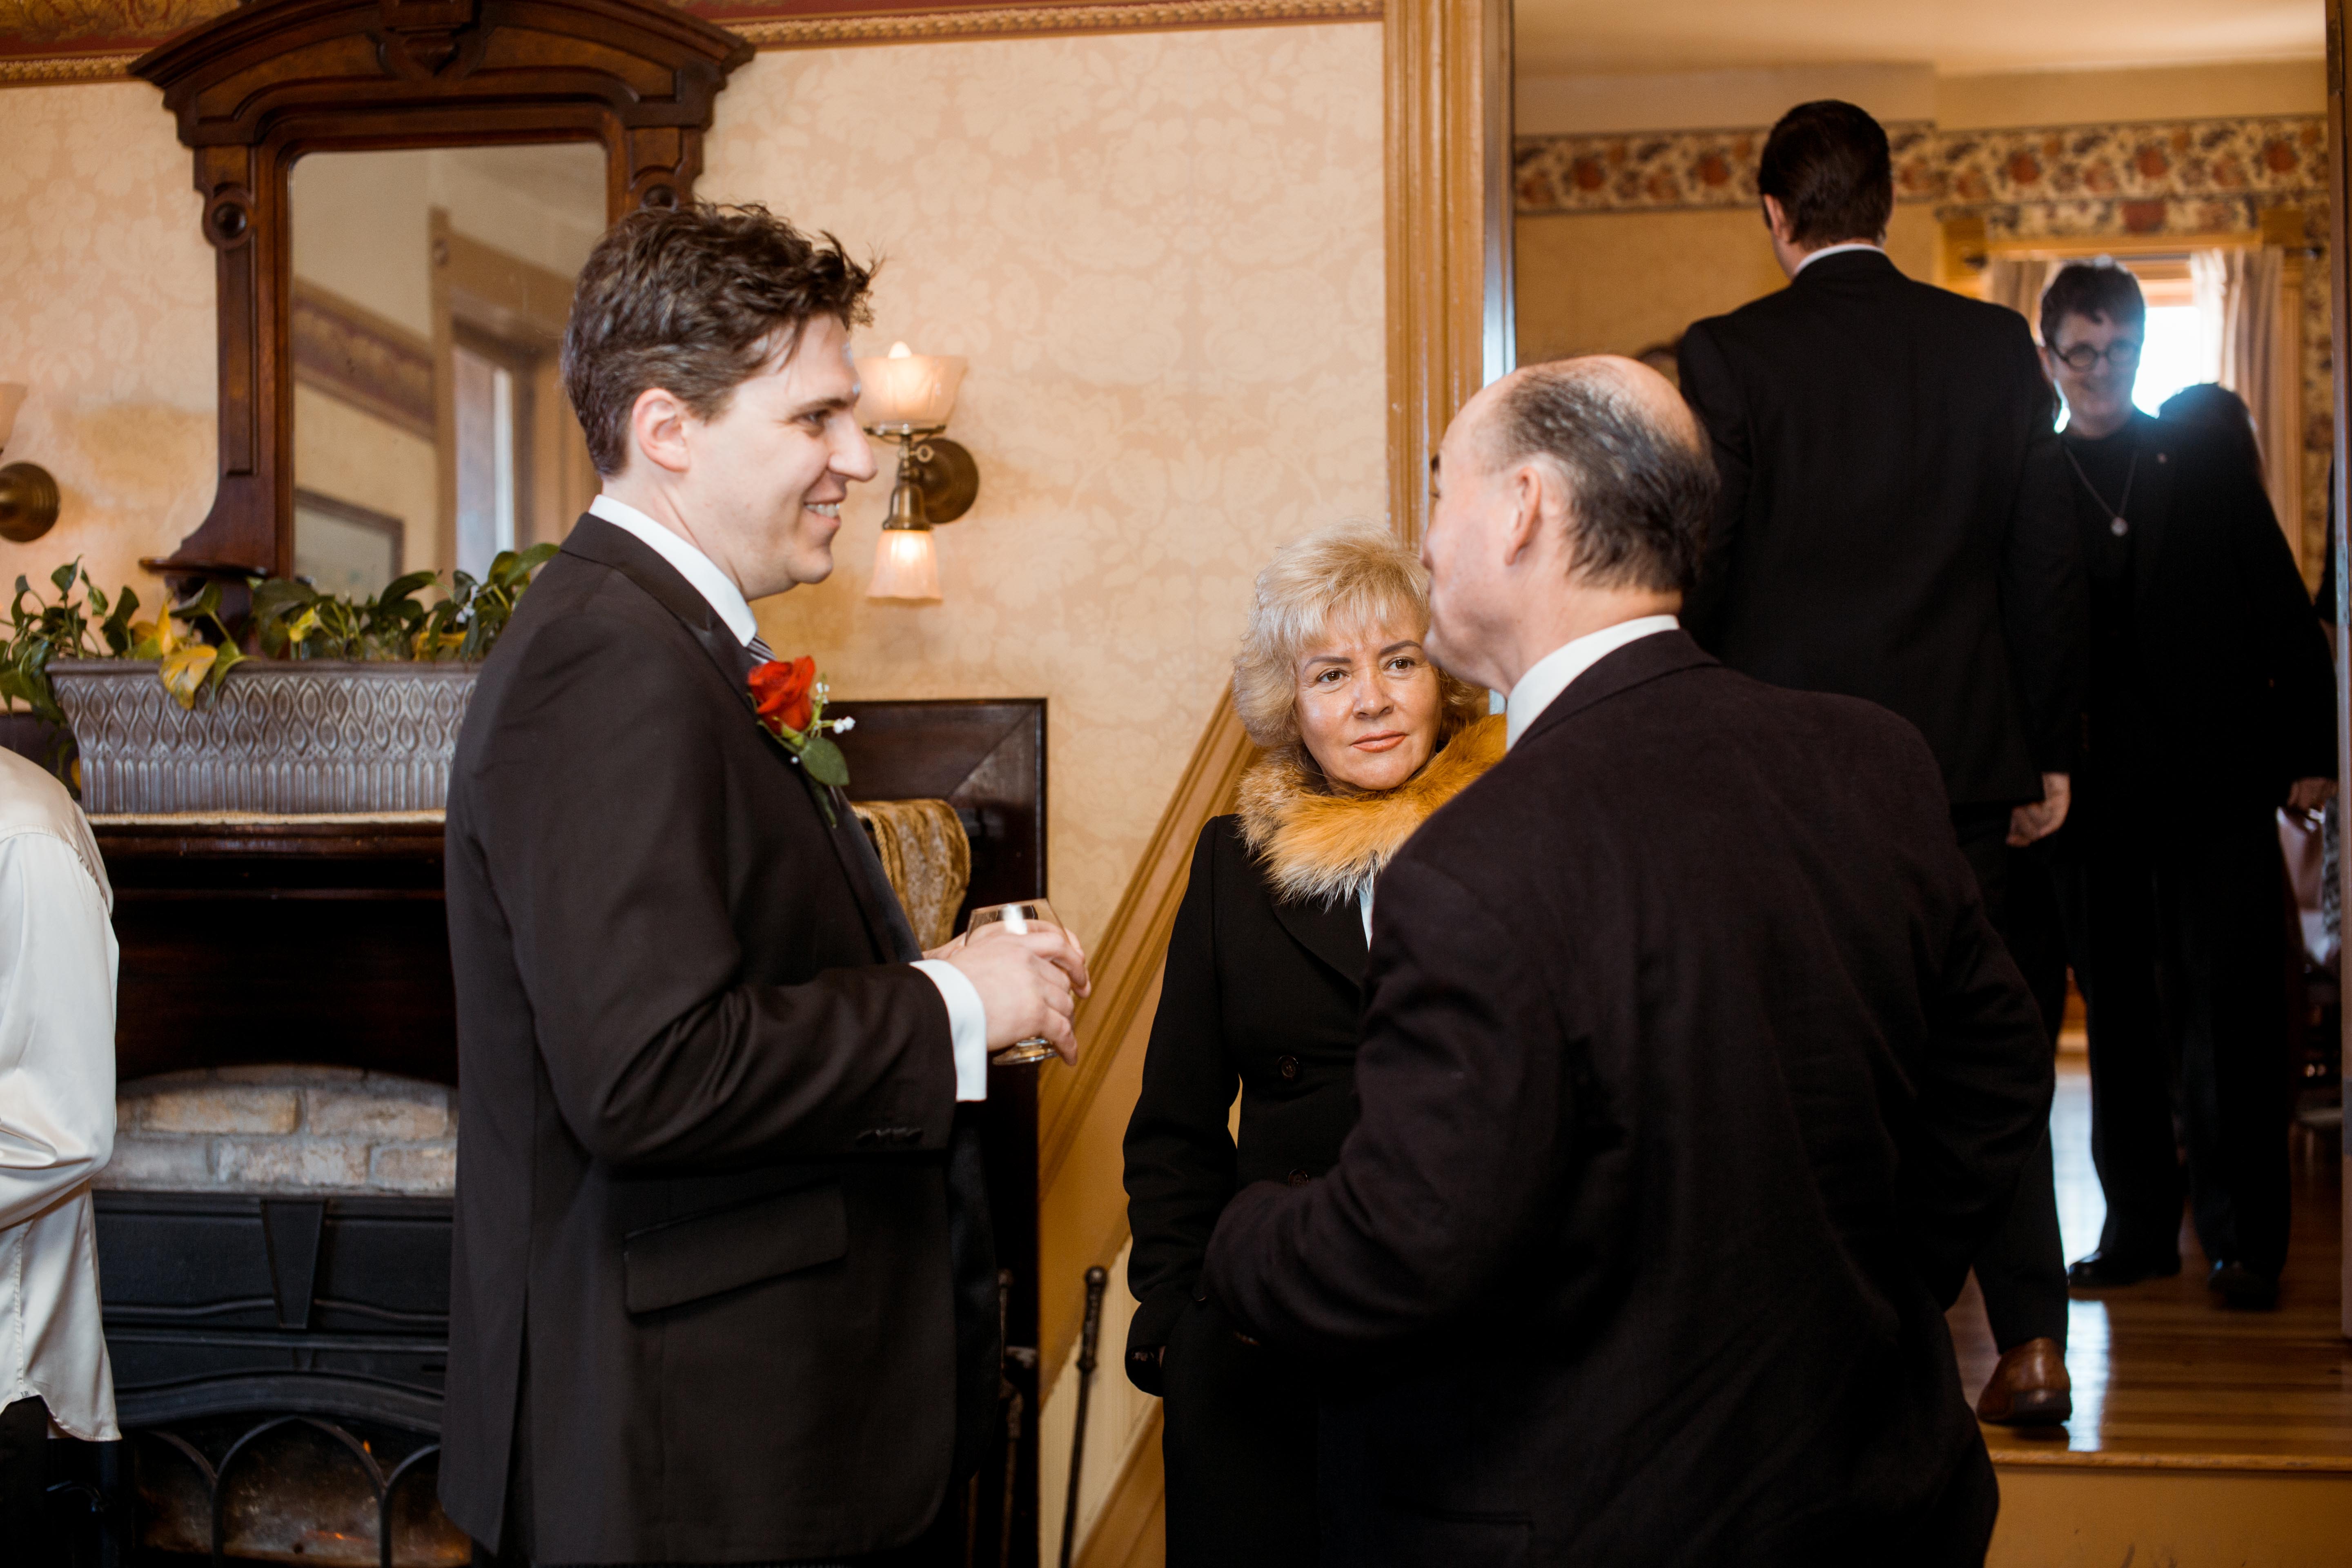 groom_mingling_guests